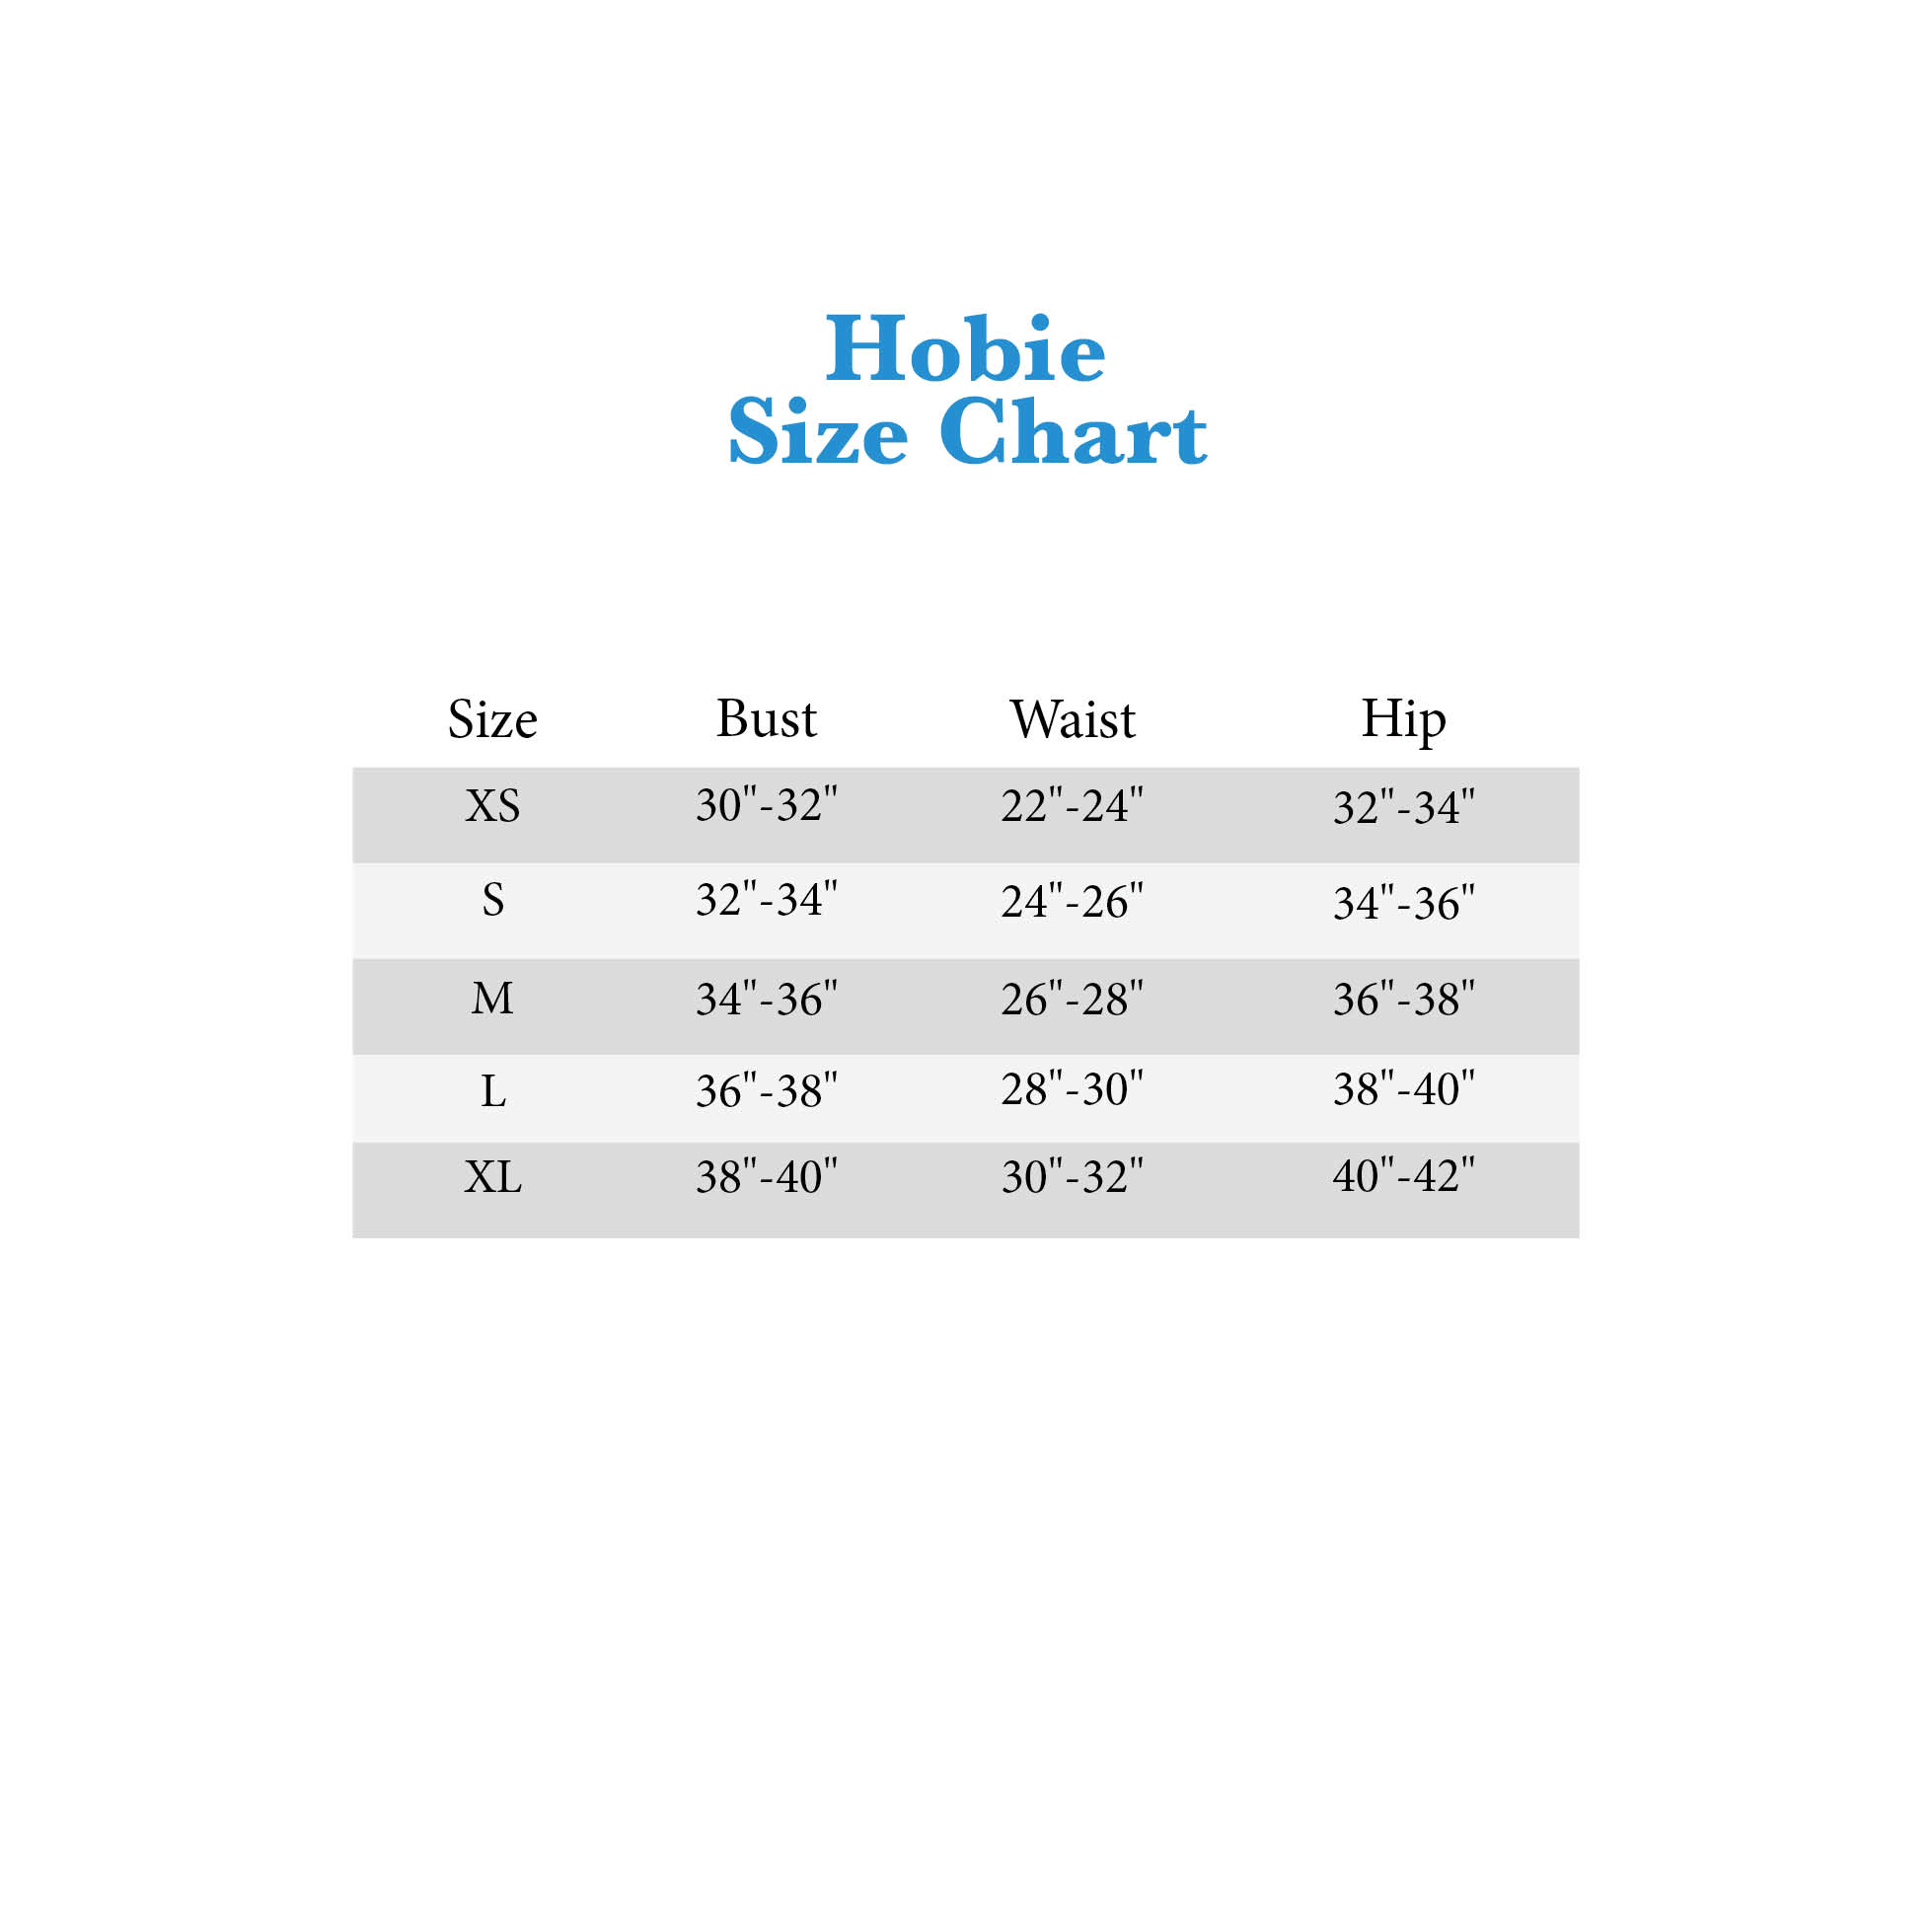 Hobie Swimsuit Size Chart